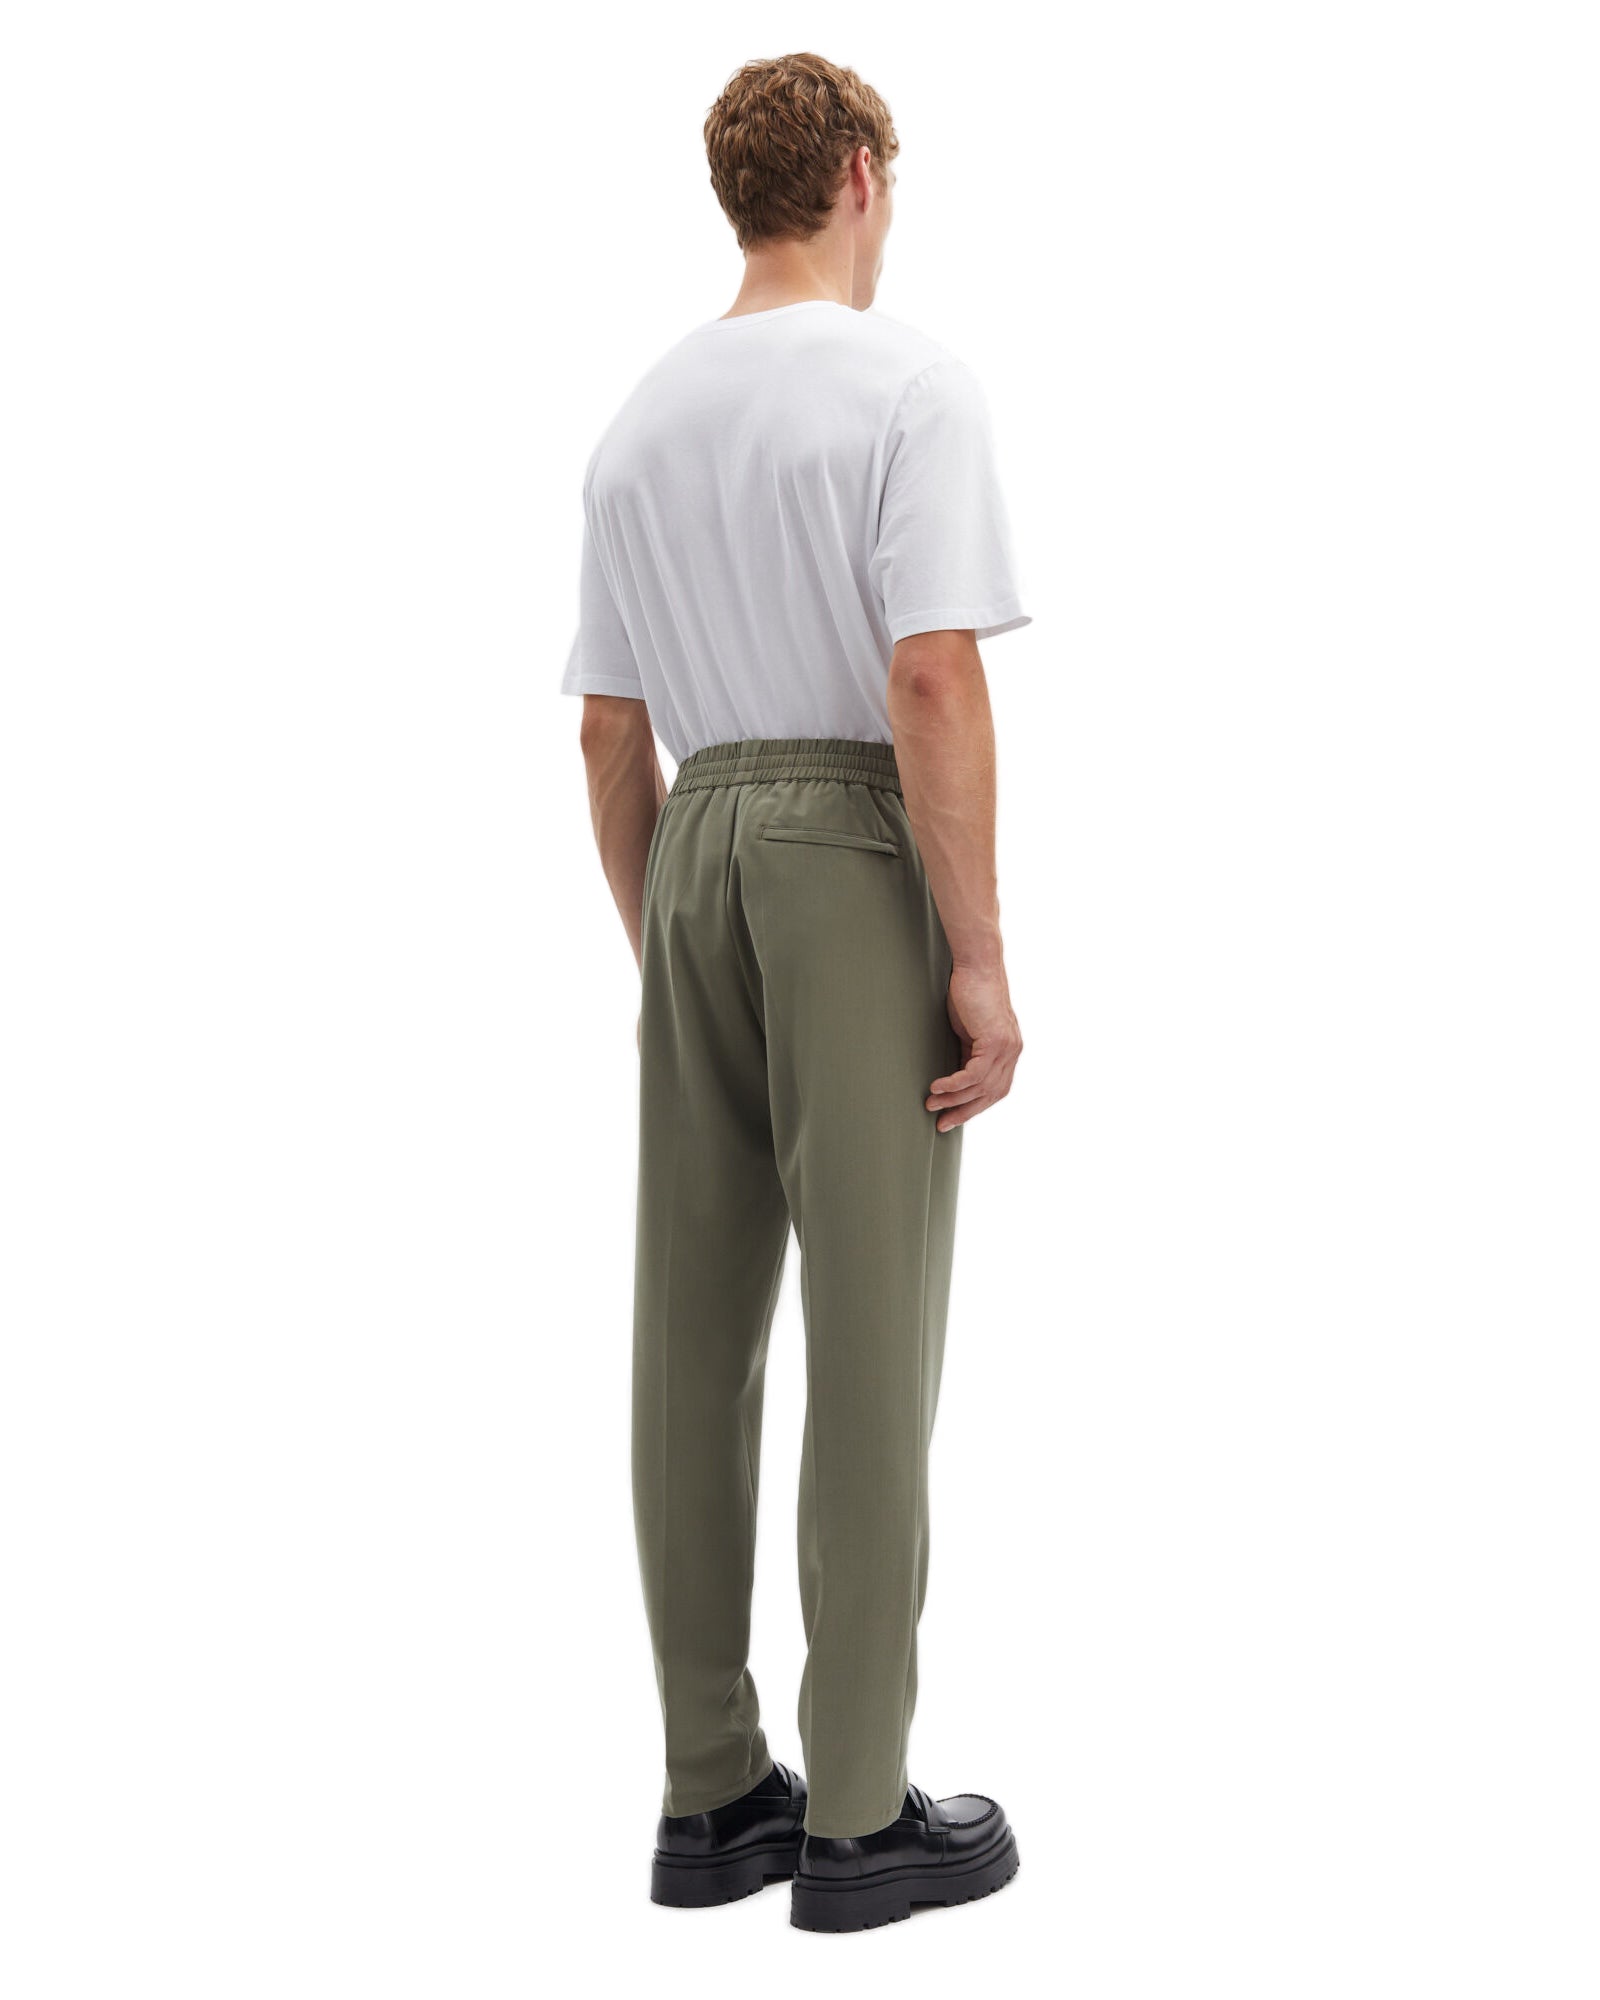 Pantalon Smithy 10821 Pantalon - Dusty Olive